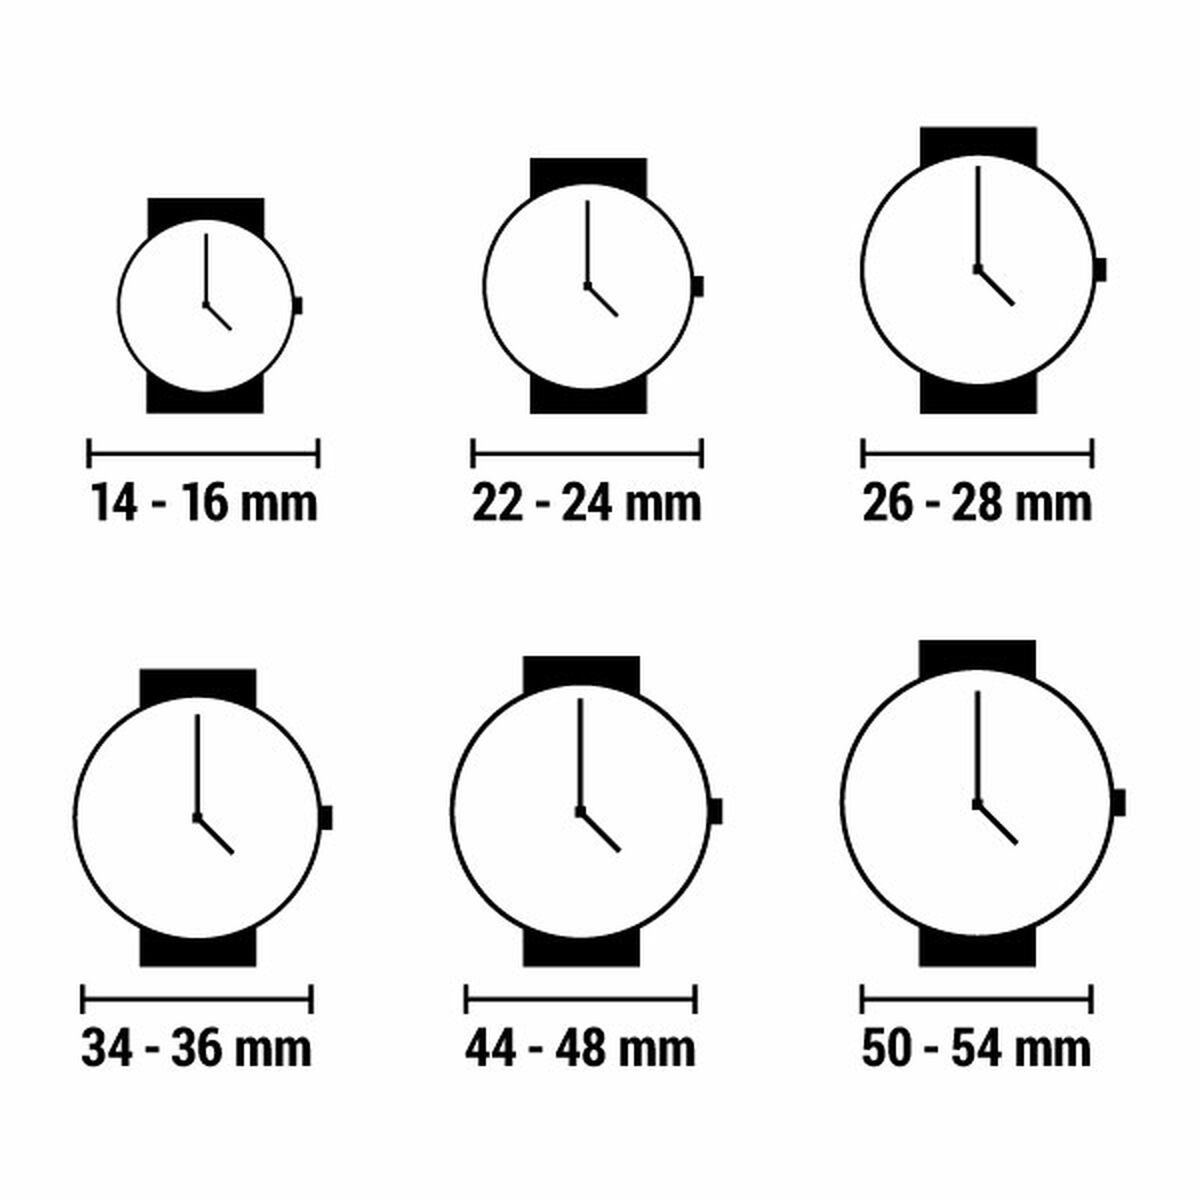 Horloge Dames CO88 Collection 8CW-10012